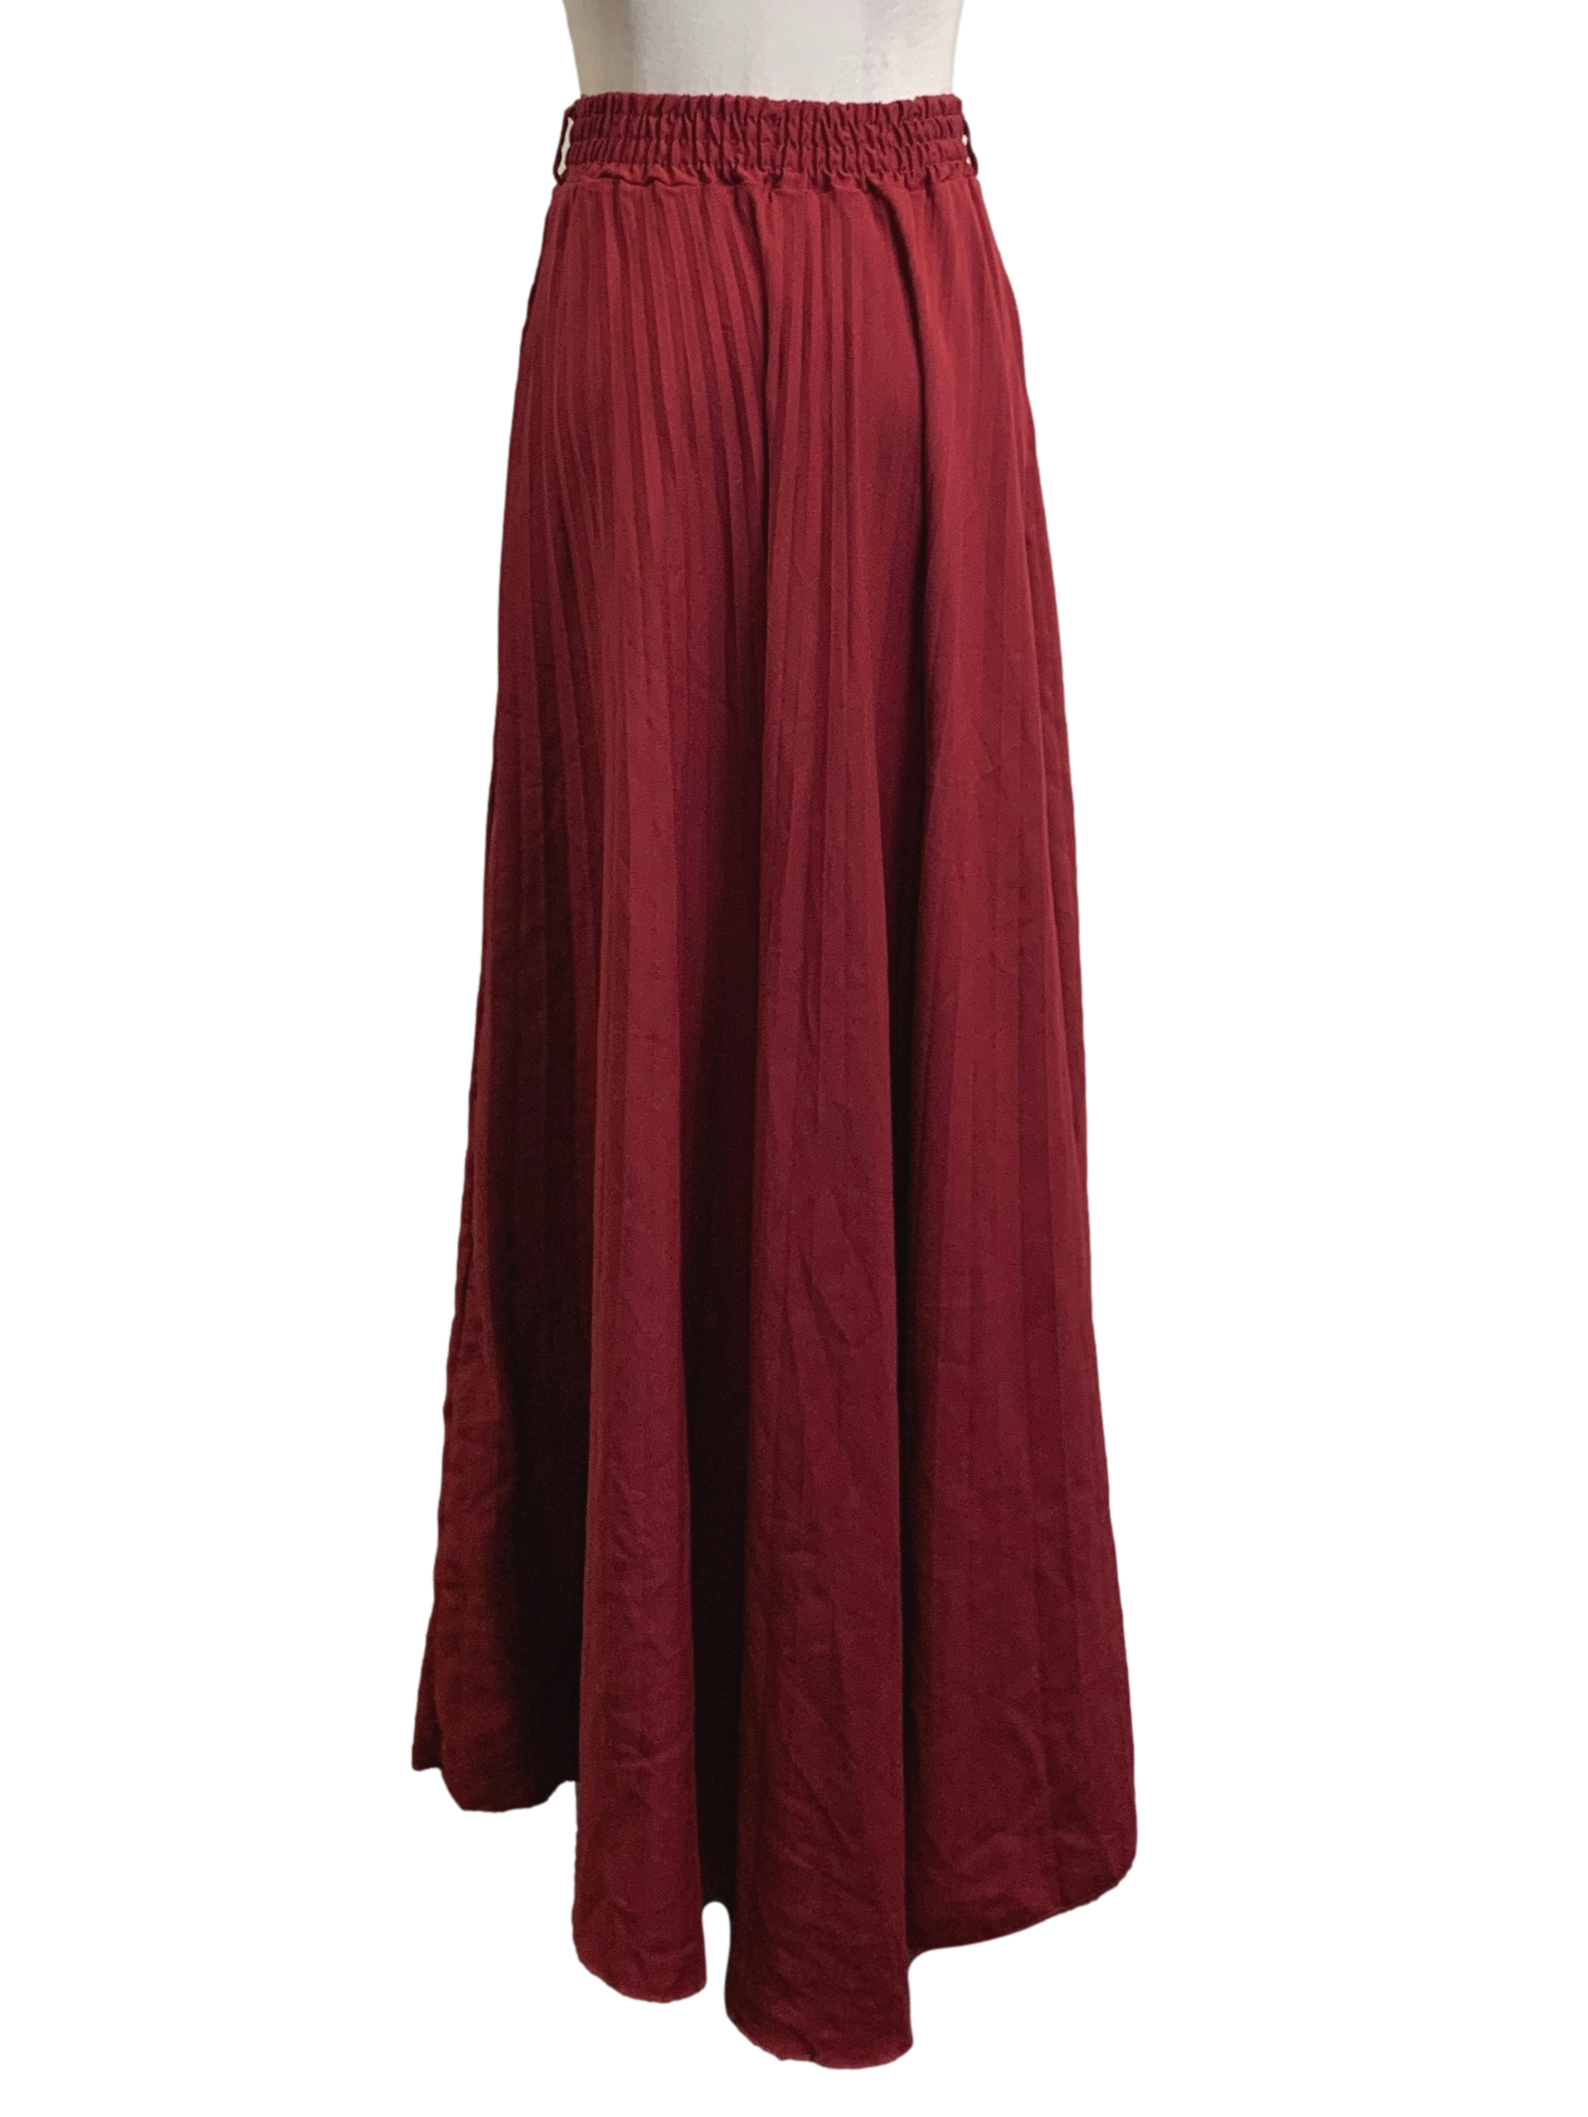 Burgundy Pleated Skirt